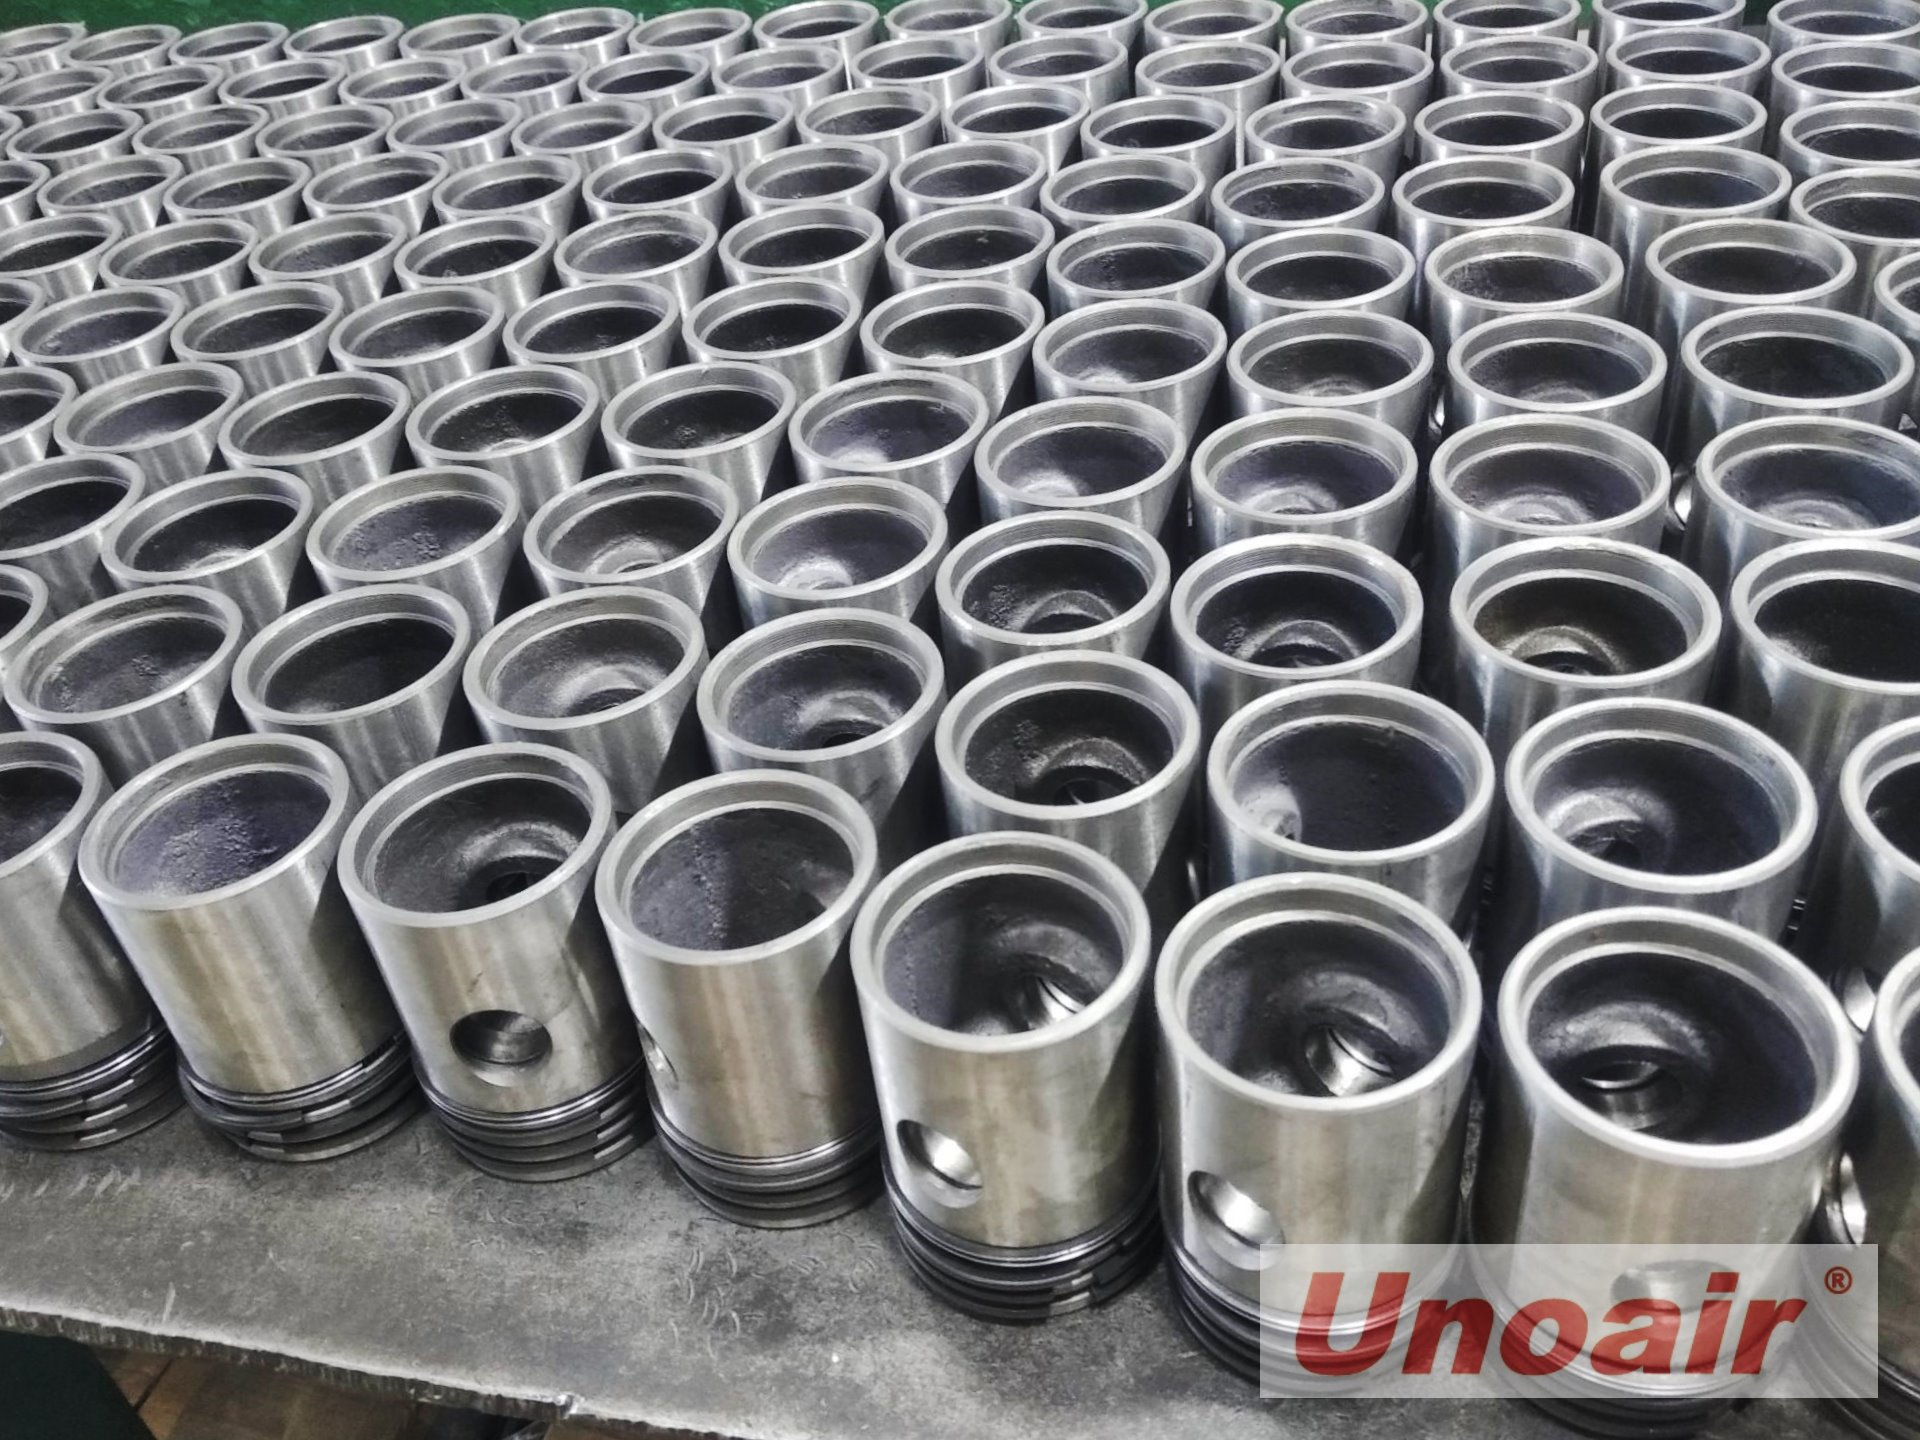 UNOAIR Weekly Update 07/29/2022 We supply spare parts for repair